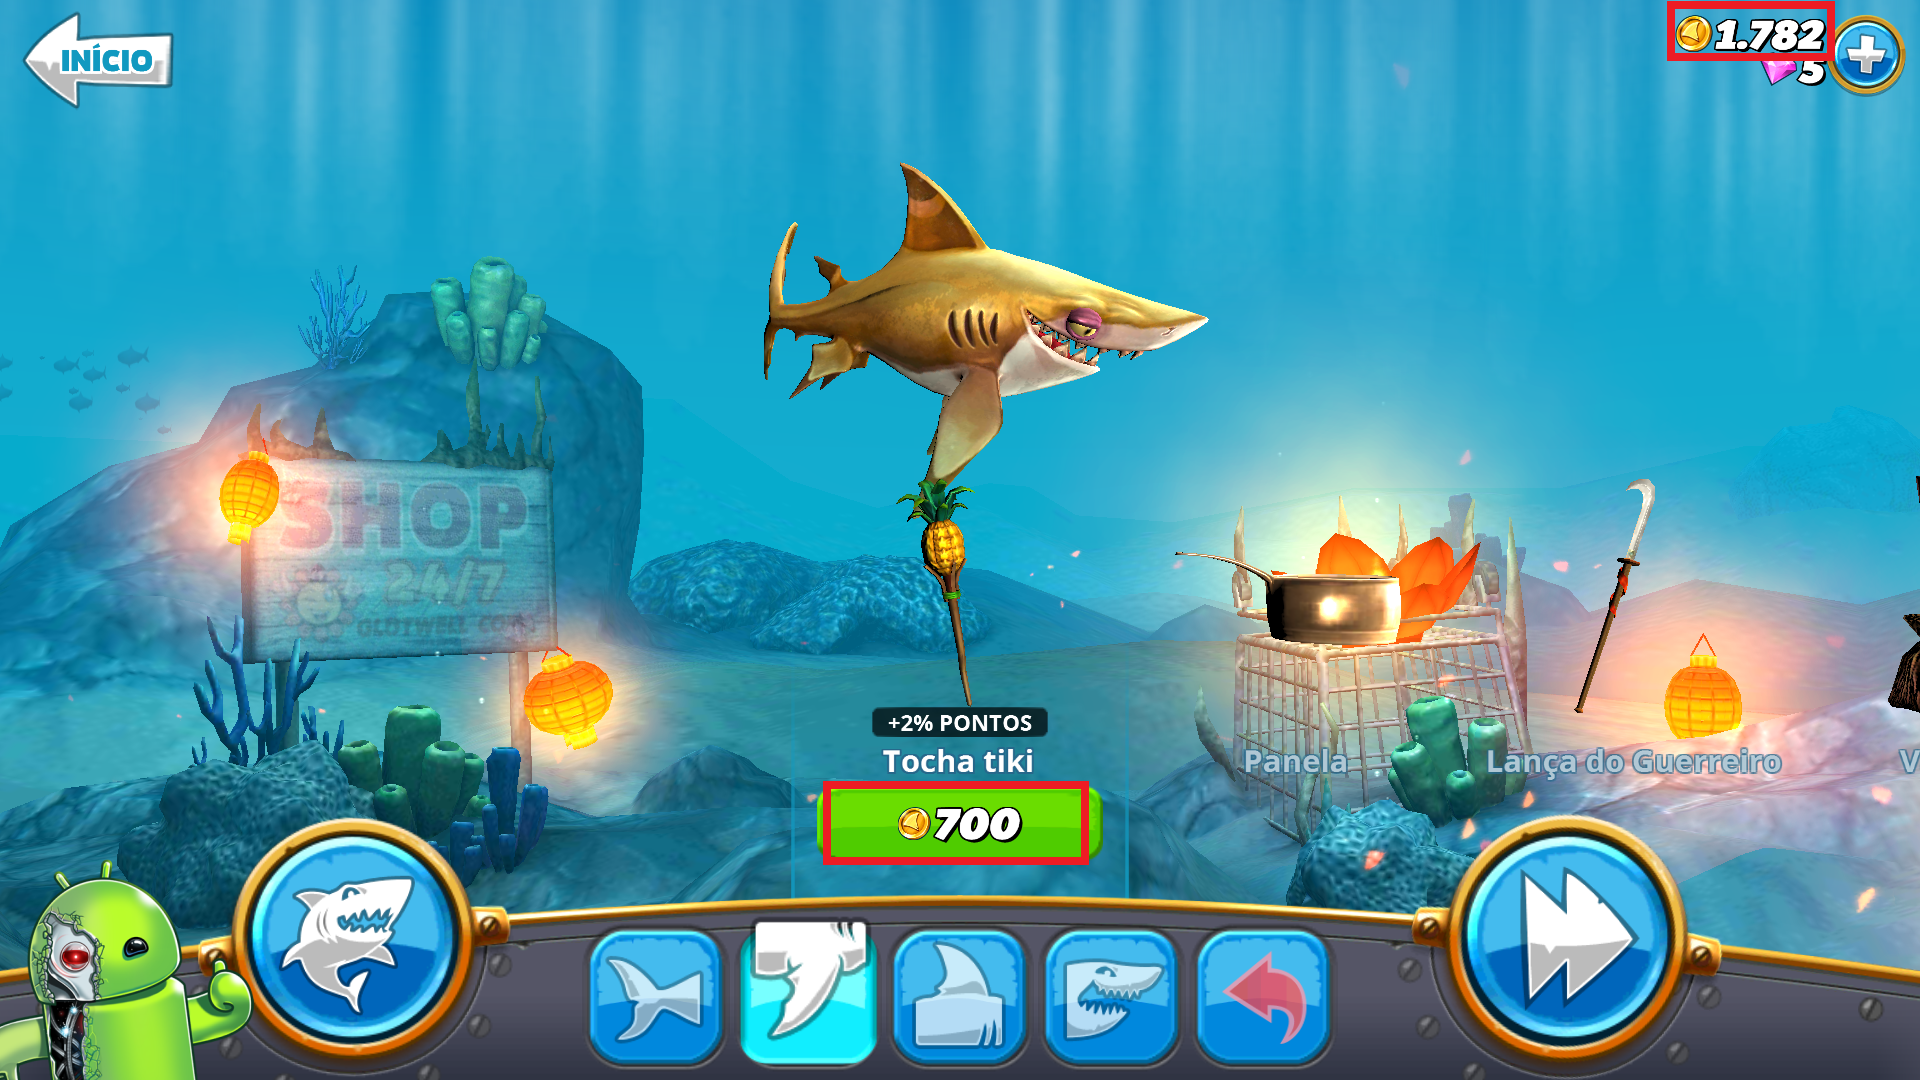 hungry shark world mod apk with in app lvl